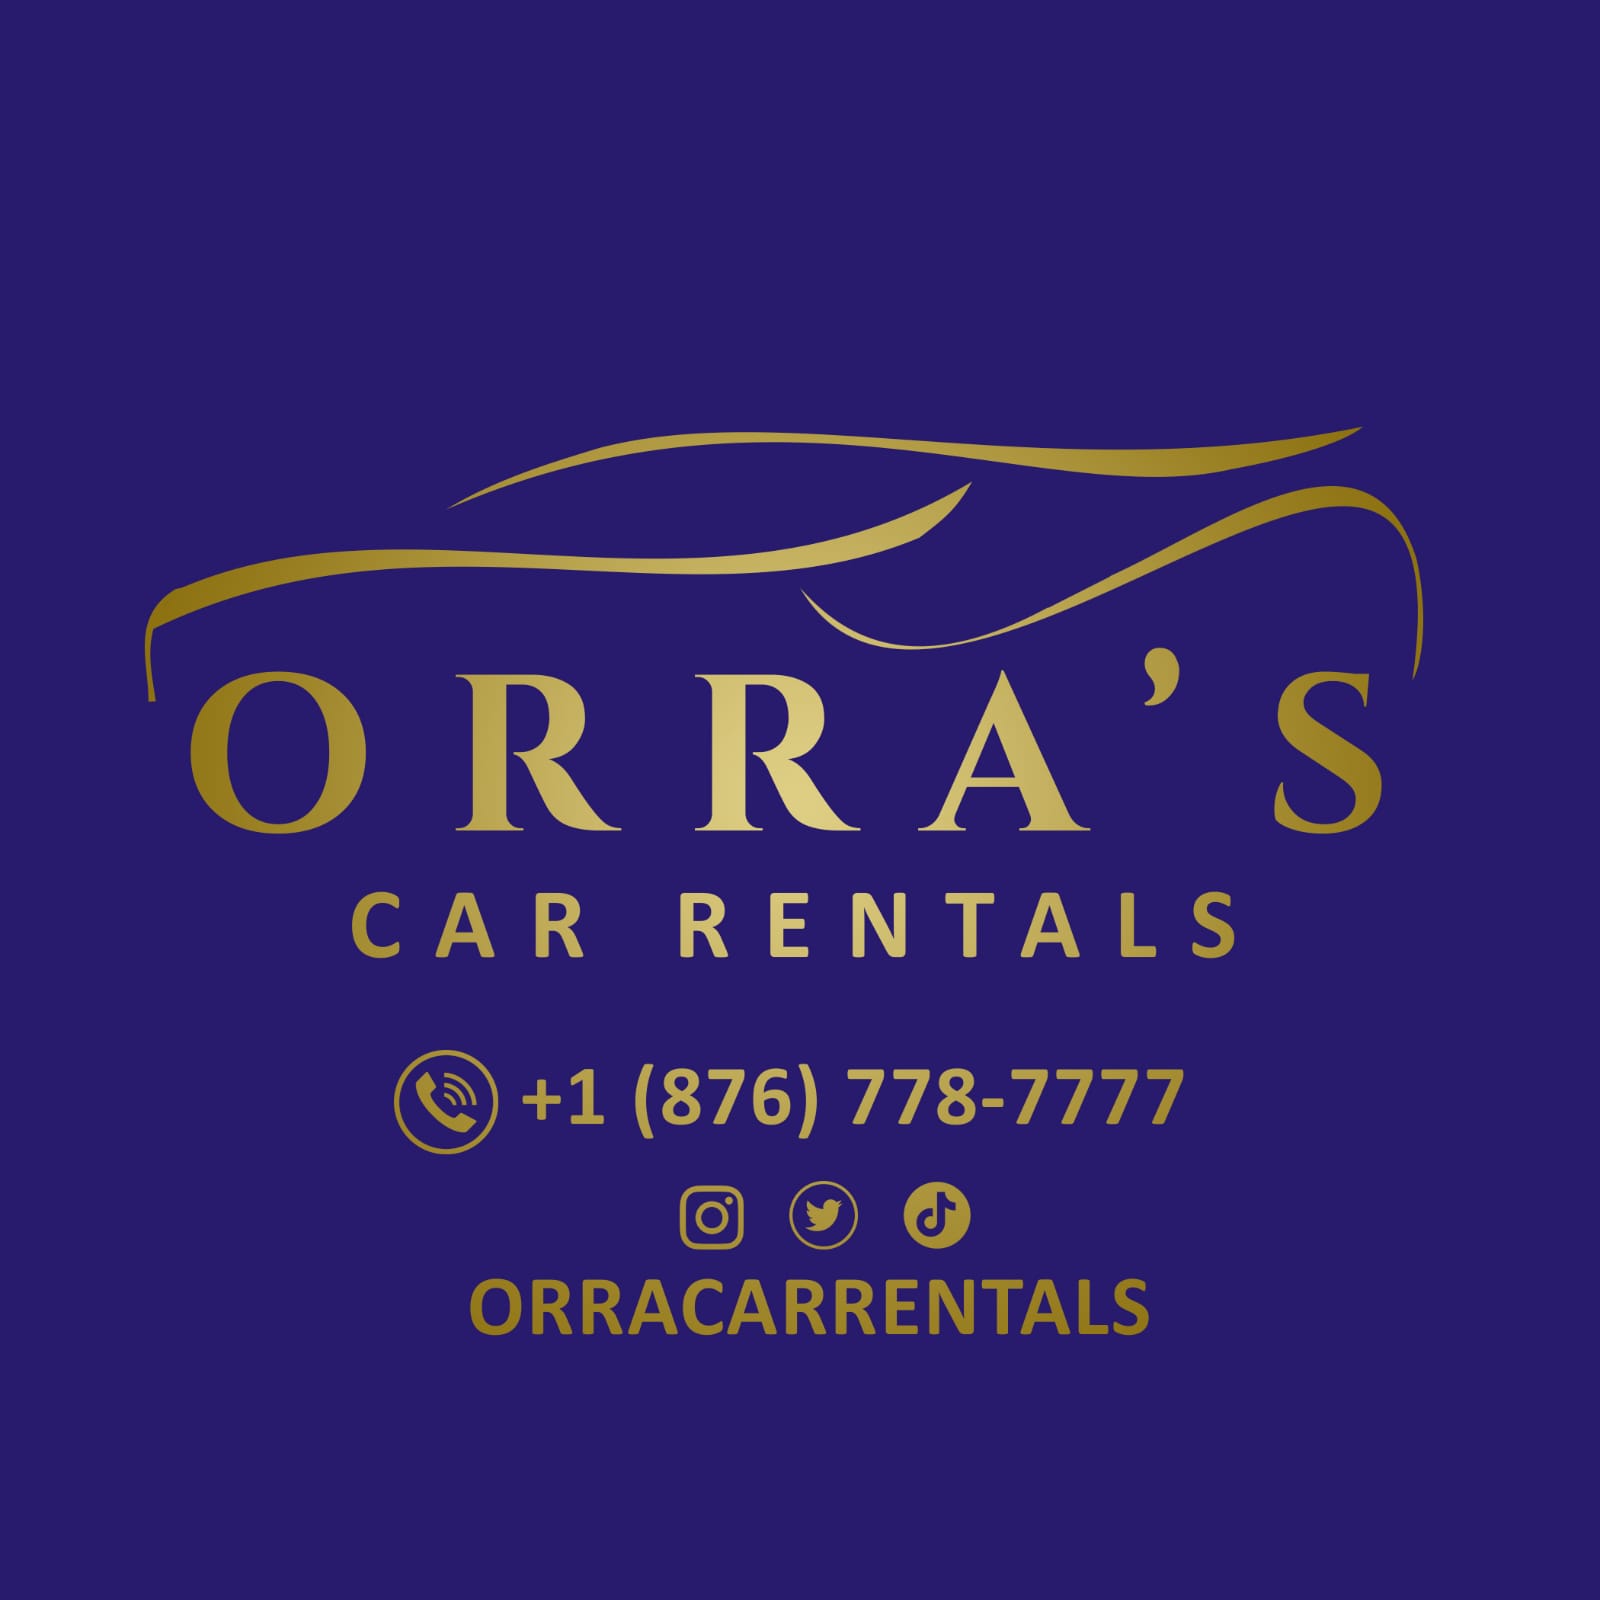 Orra’s Car Rentals  – service in Kingston Jamaica